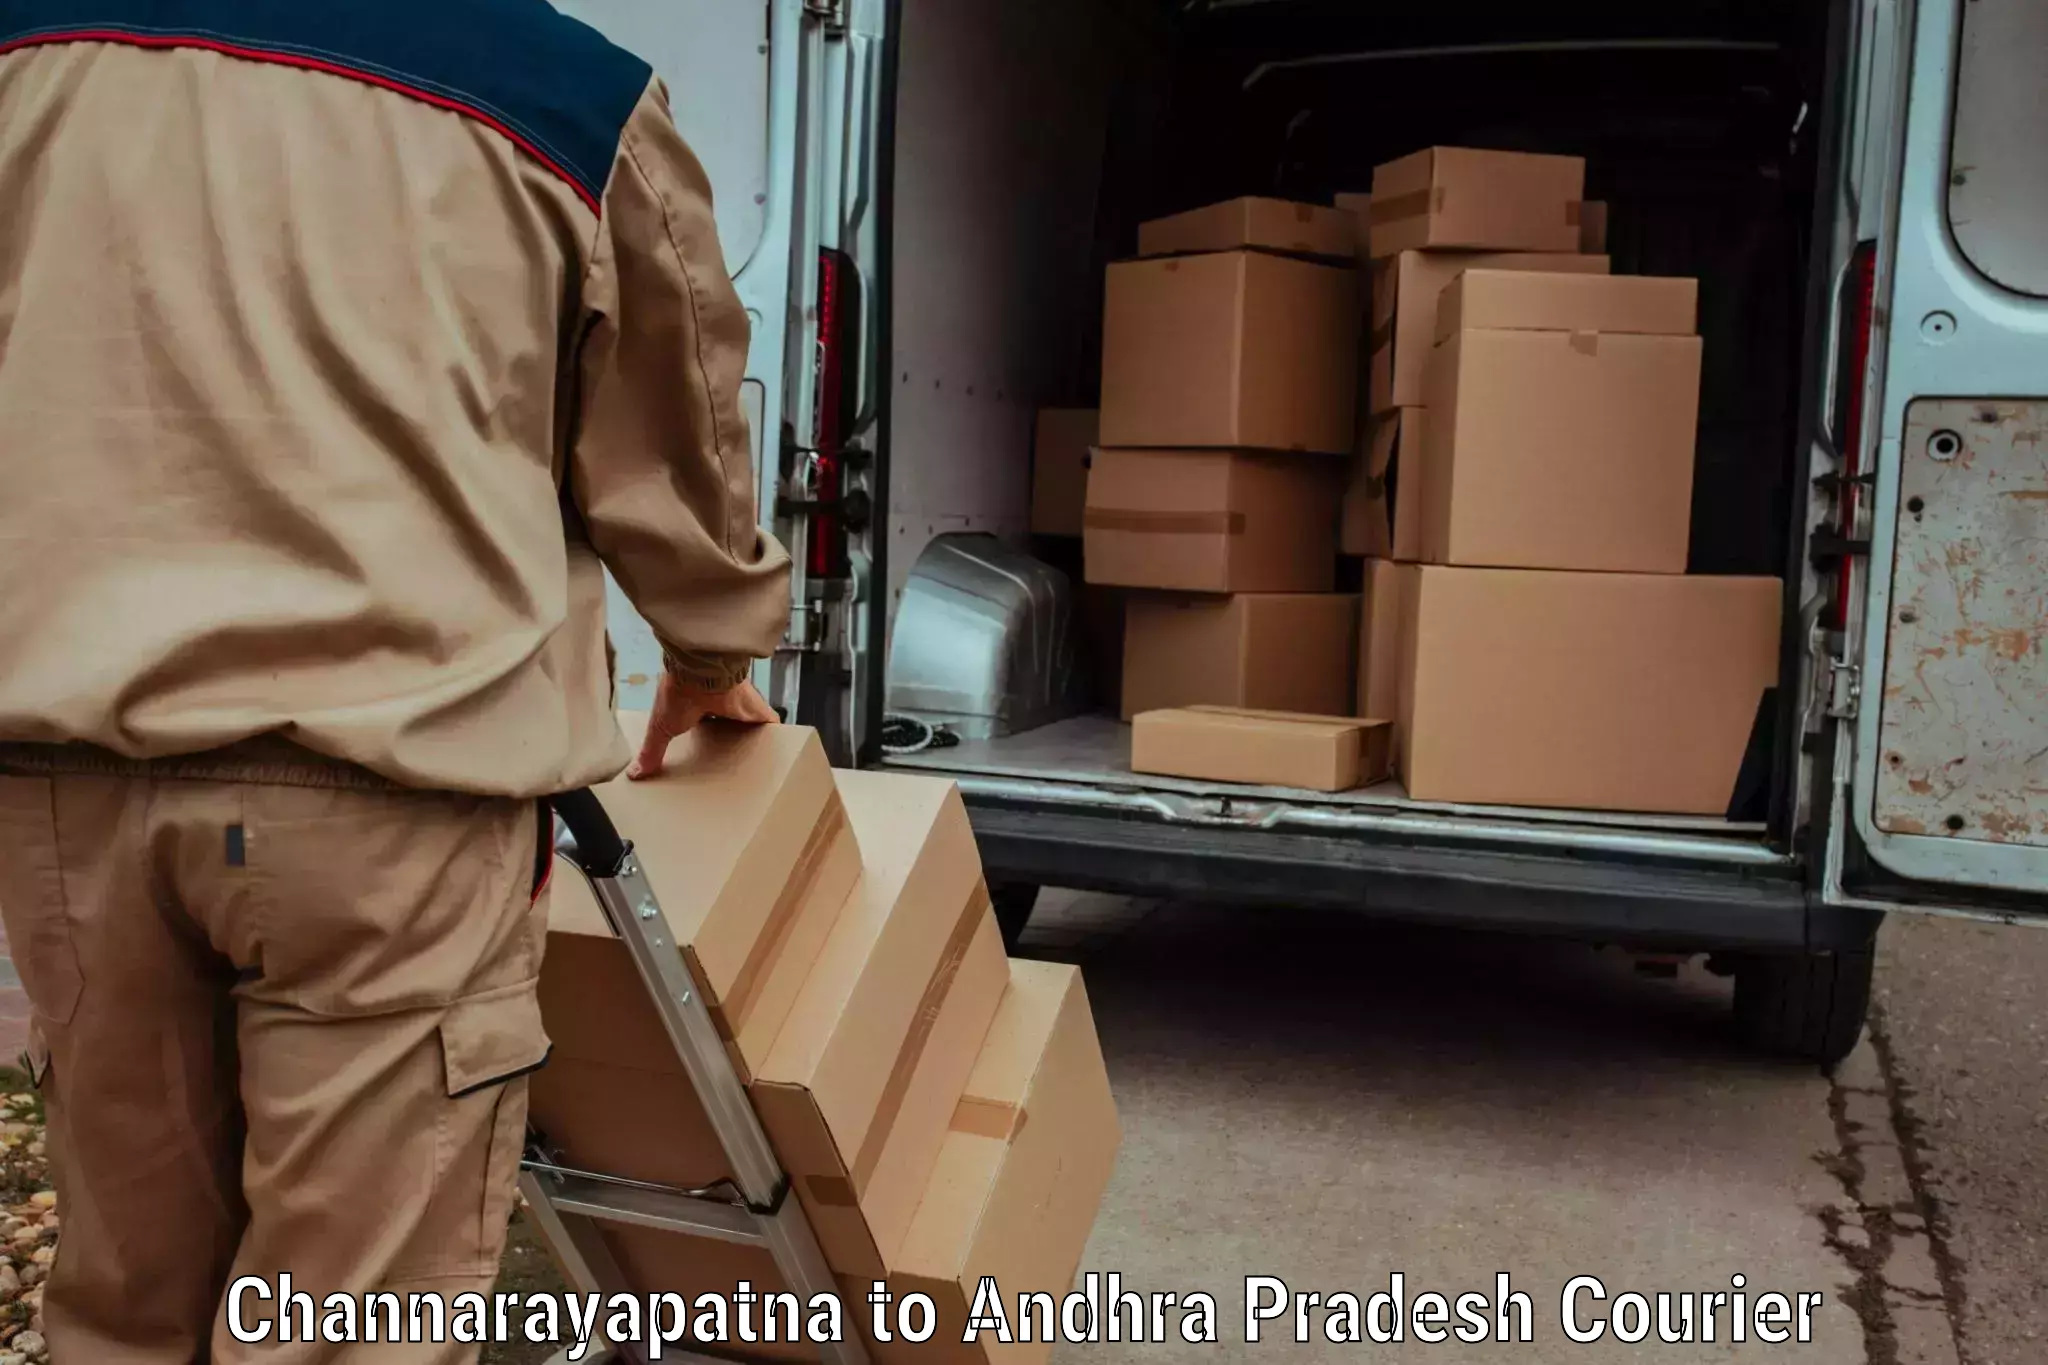 Courier service booking Channarayapatna to Yerragondapalem